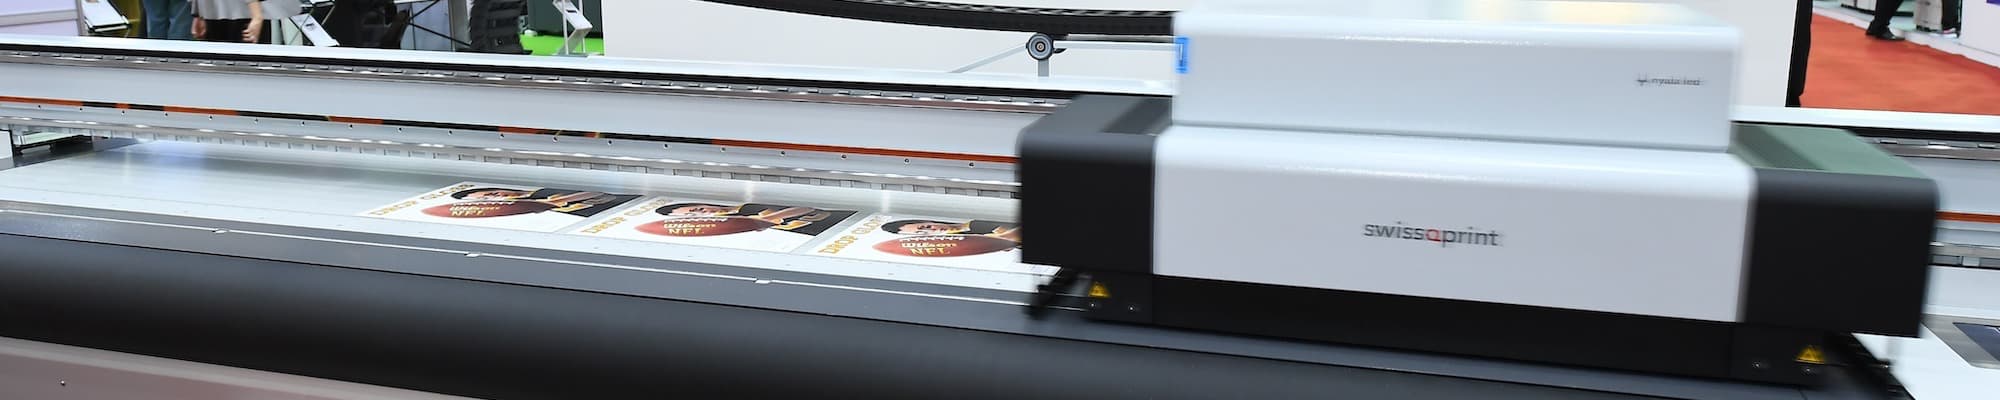 Print Industry Trends